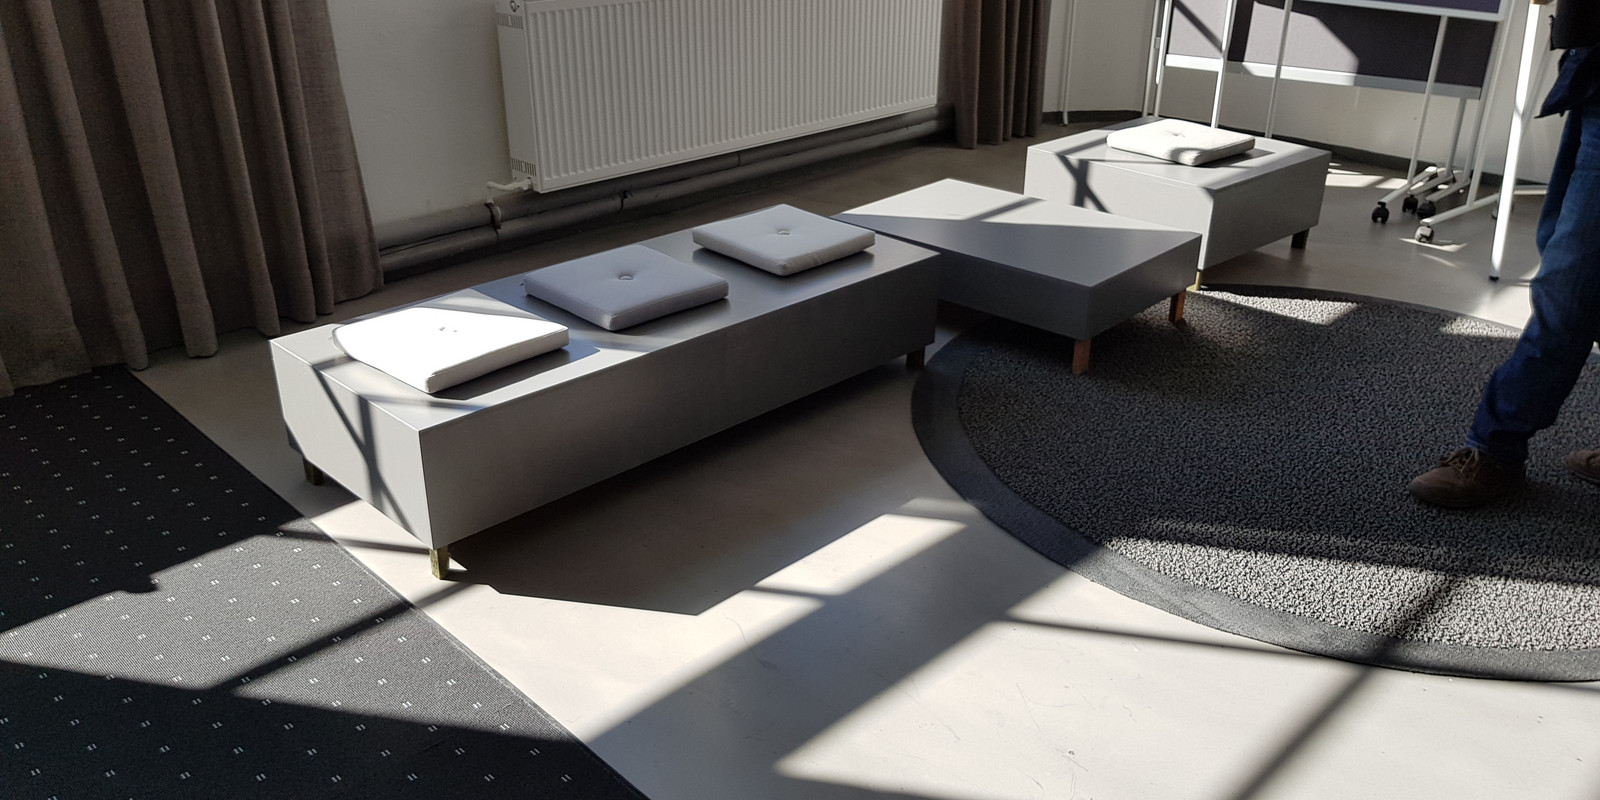 Tour der Moderne 2019 Bauhaus pro office Lemgo Bielefeld Bild 25